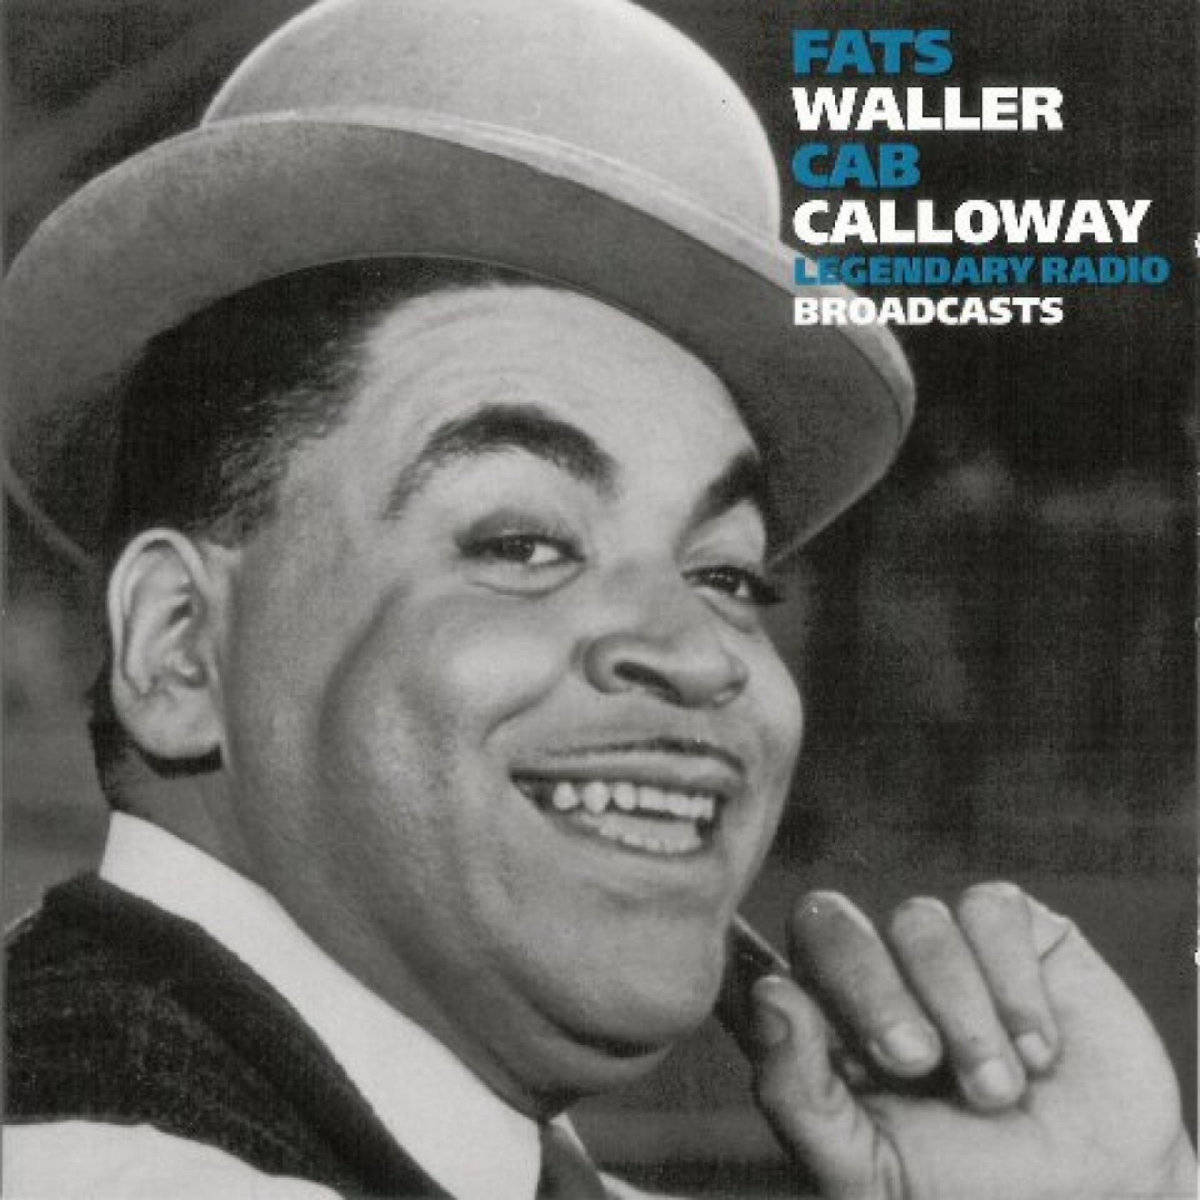 Fats Waller Cab Calloway Legendary Radio Broadcasts 2008 Wallpaper